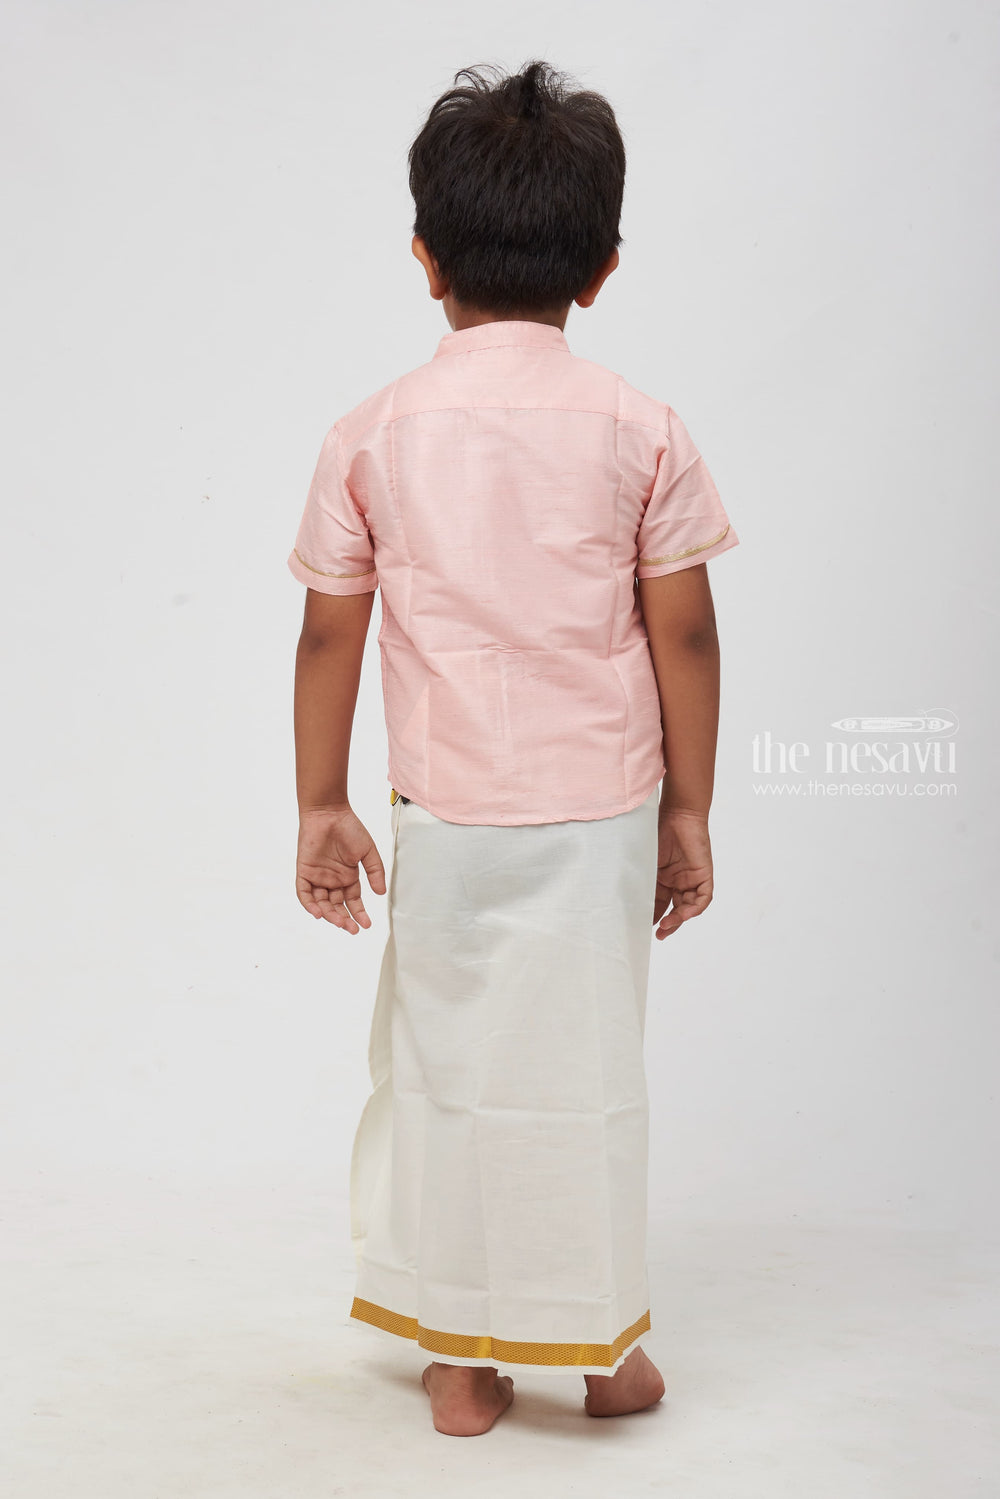 The Nesavu Boys Silk Shirt Boys Pink Silk Shirt with Ornate Embellishment Nesavu Nesavu Boys Pink Silk Shirt | Ornate Embellishment | Traditional Celebration Wear | The Nesavu